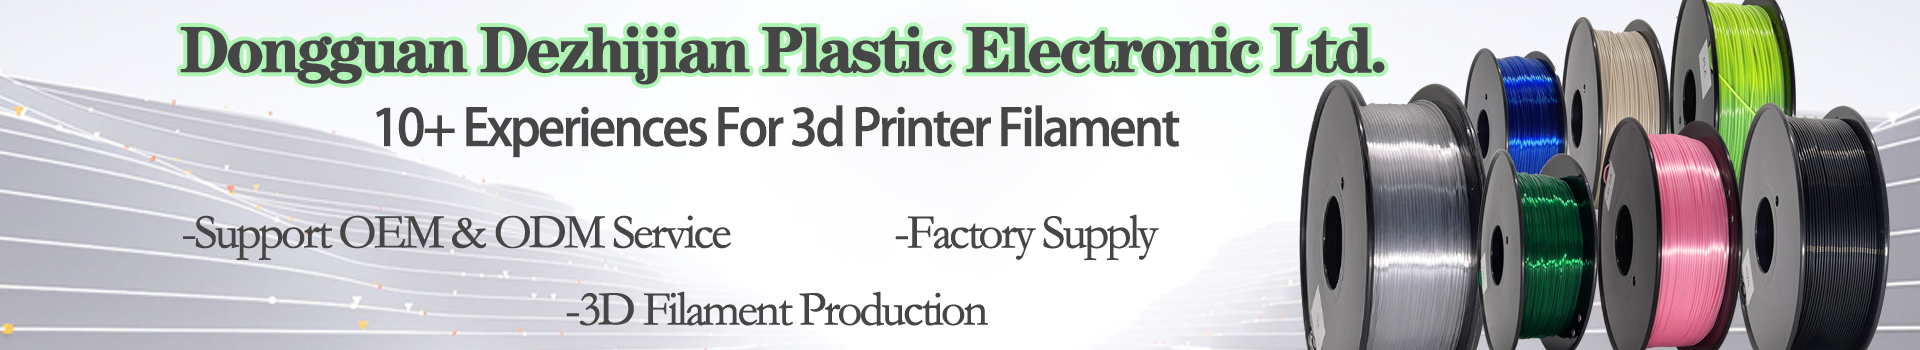 PinRui Alta Qualidade 1kg 3d PLA + Filamento PLA Pro 1.75mm Filamento